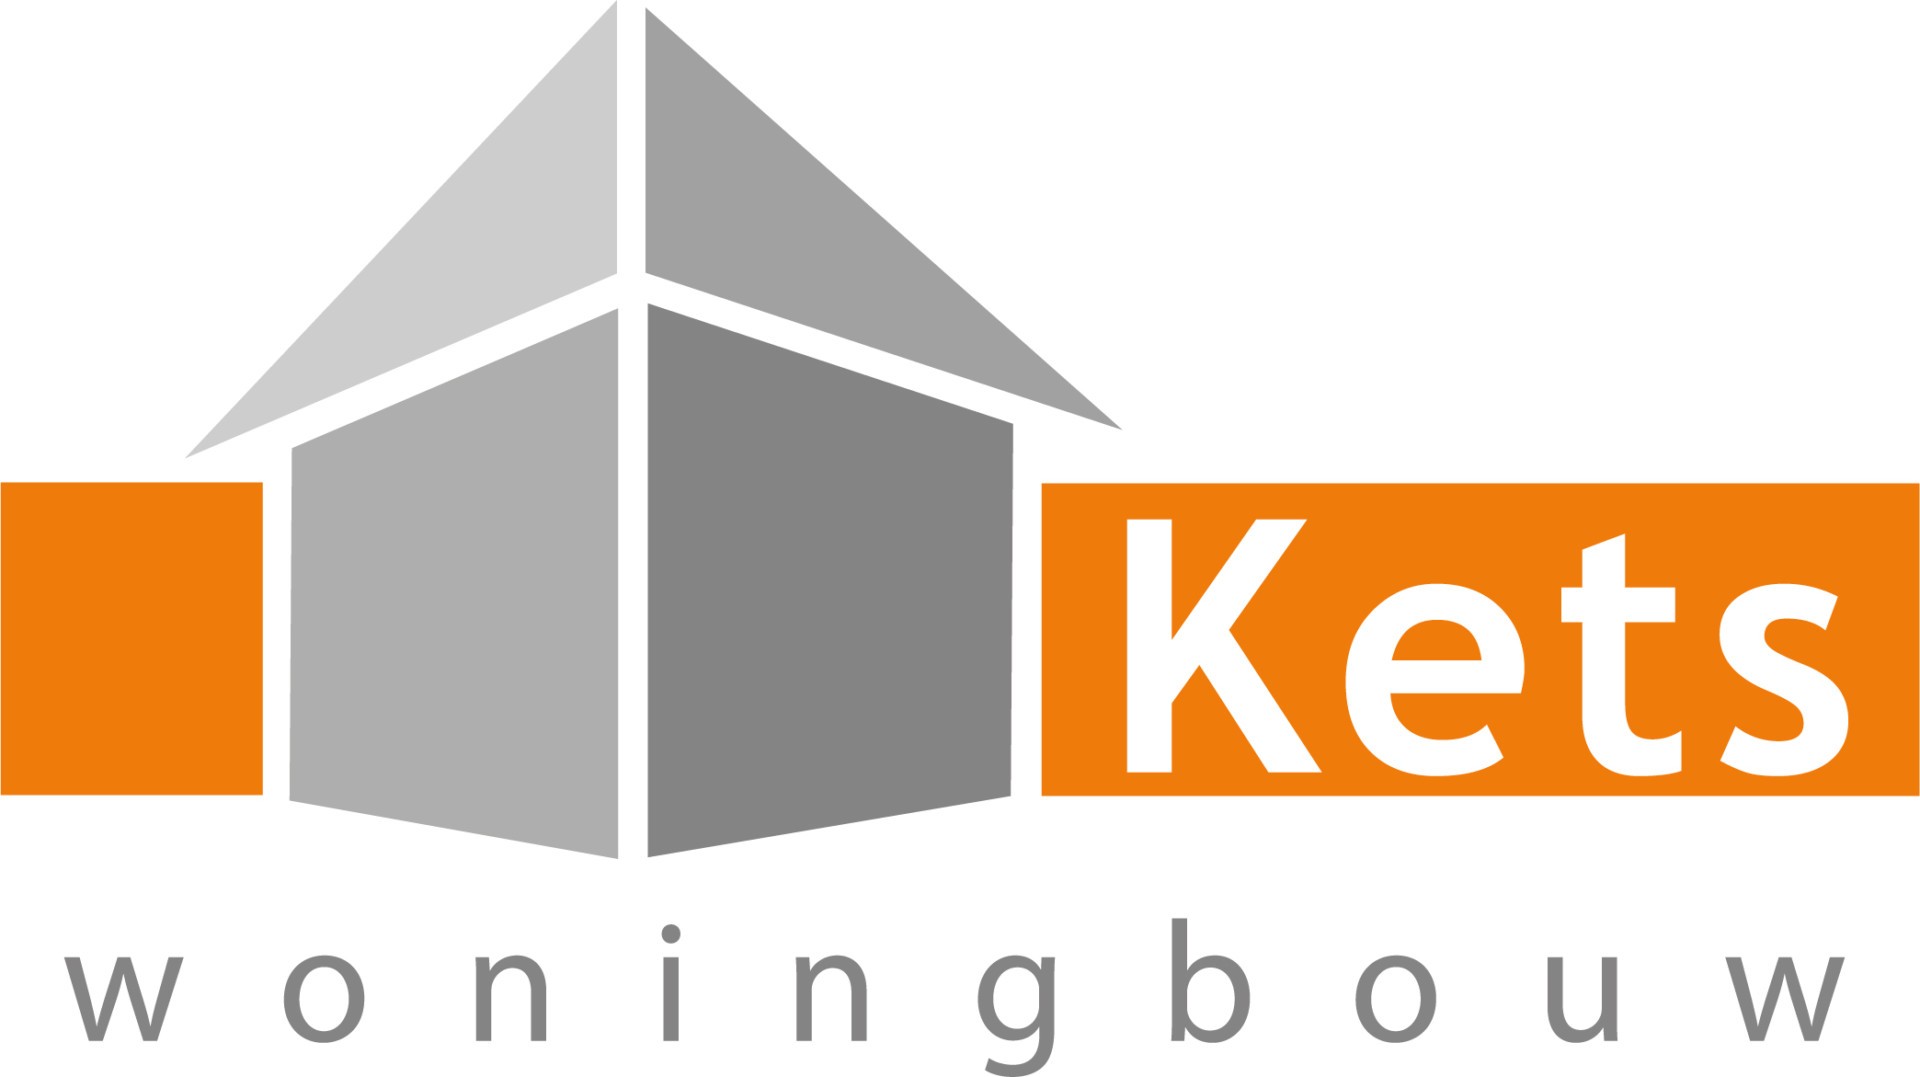 Kets-Woningbouw-logo